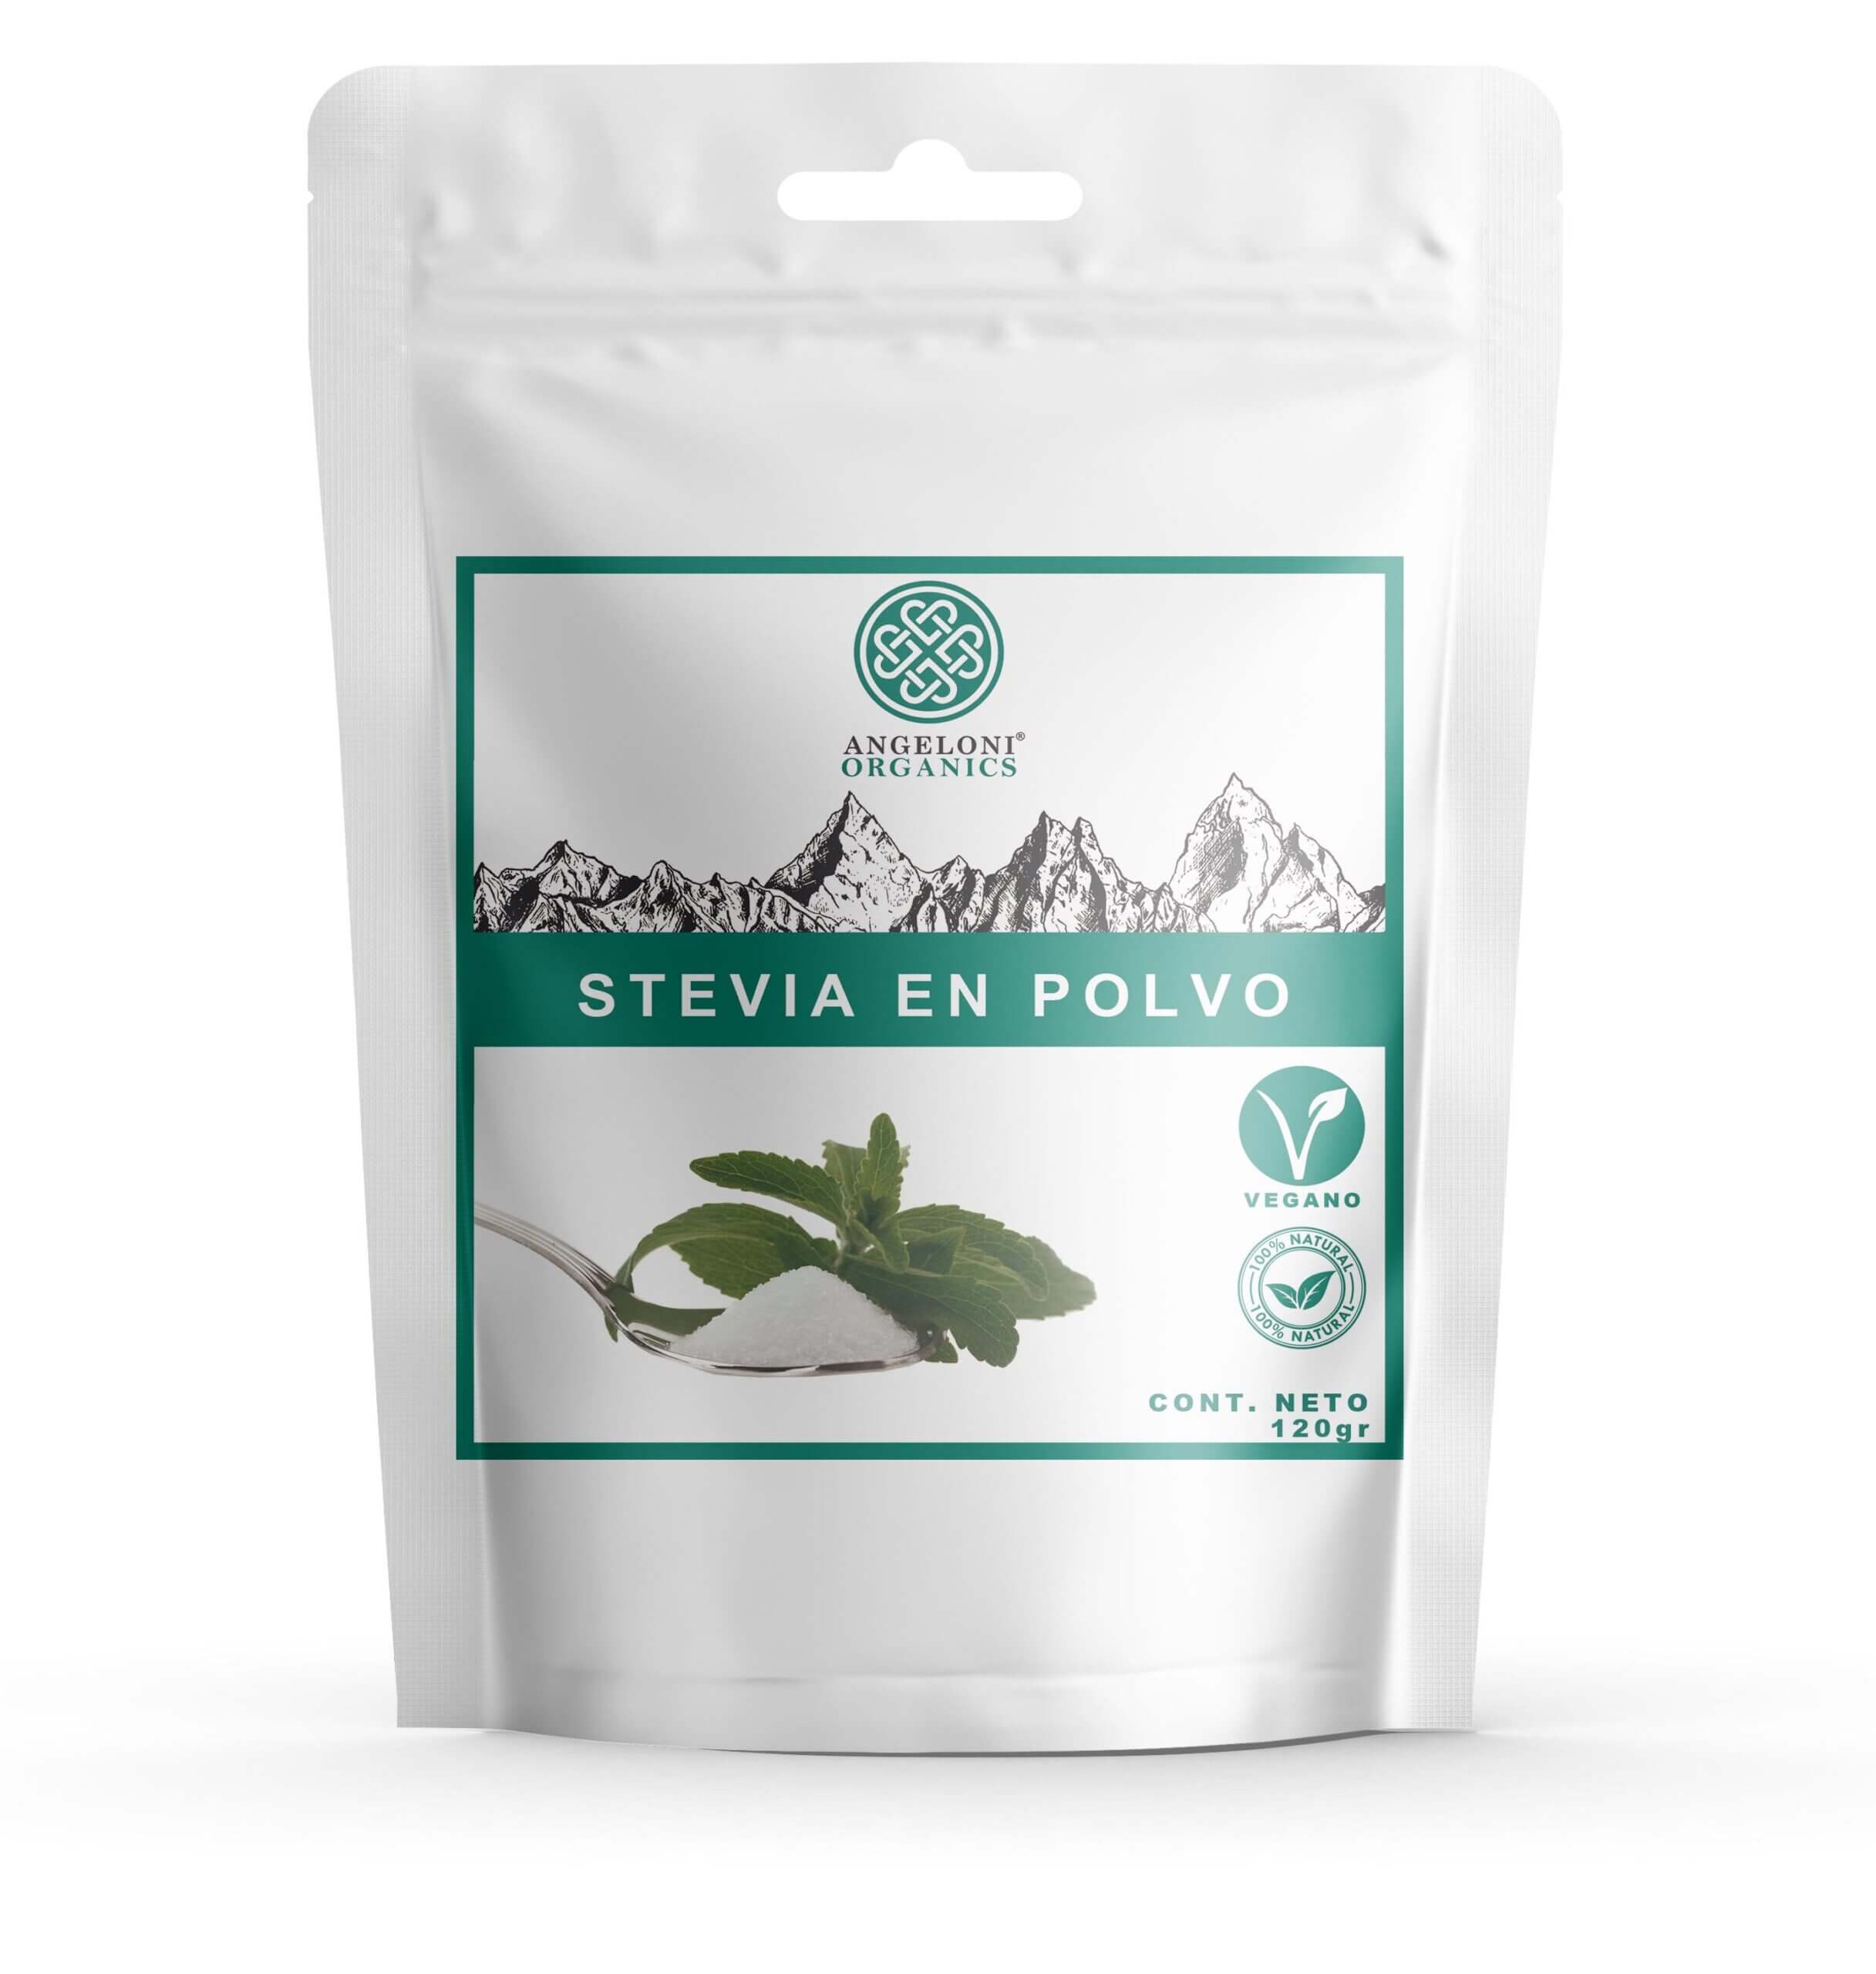 Stevia angeloni organics